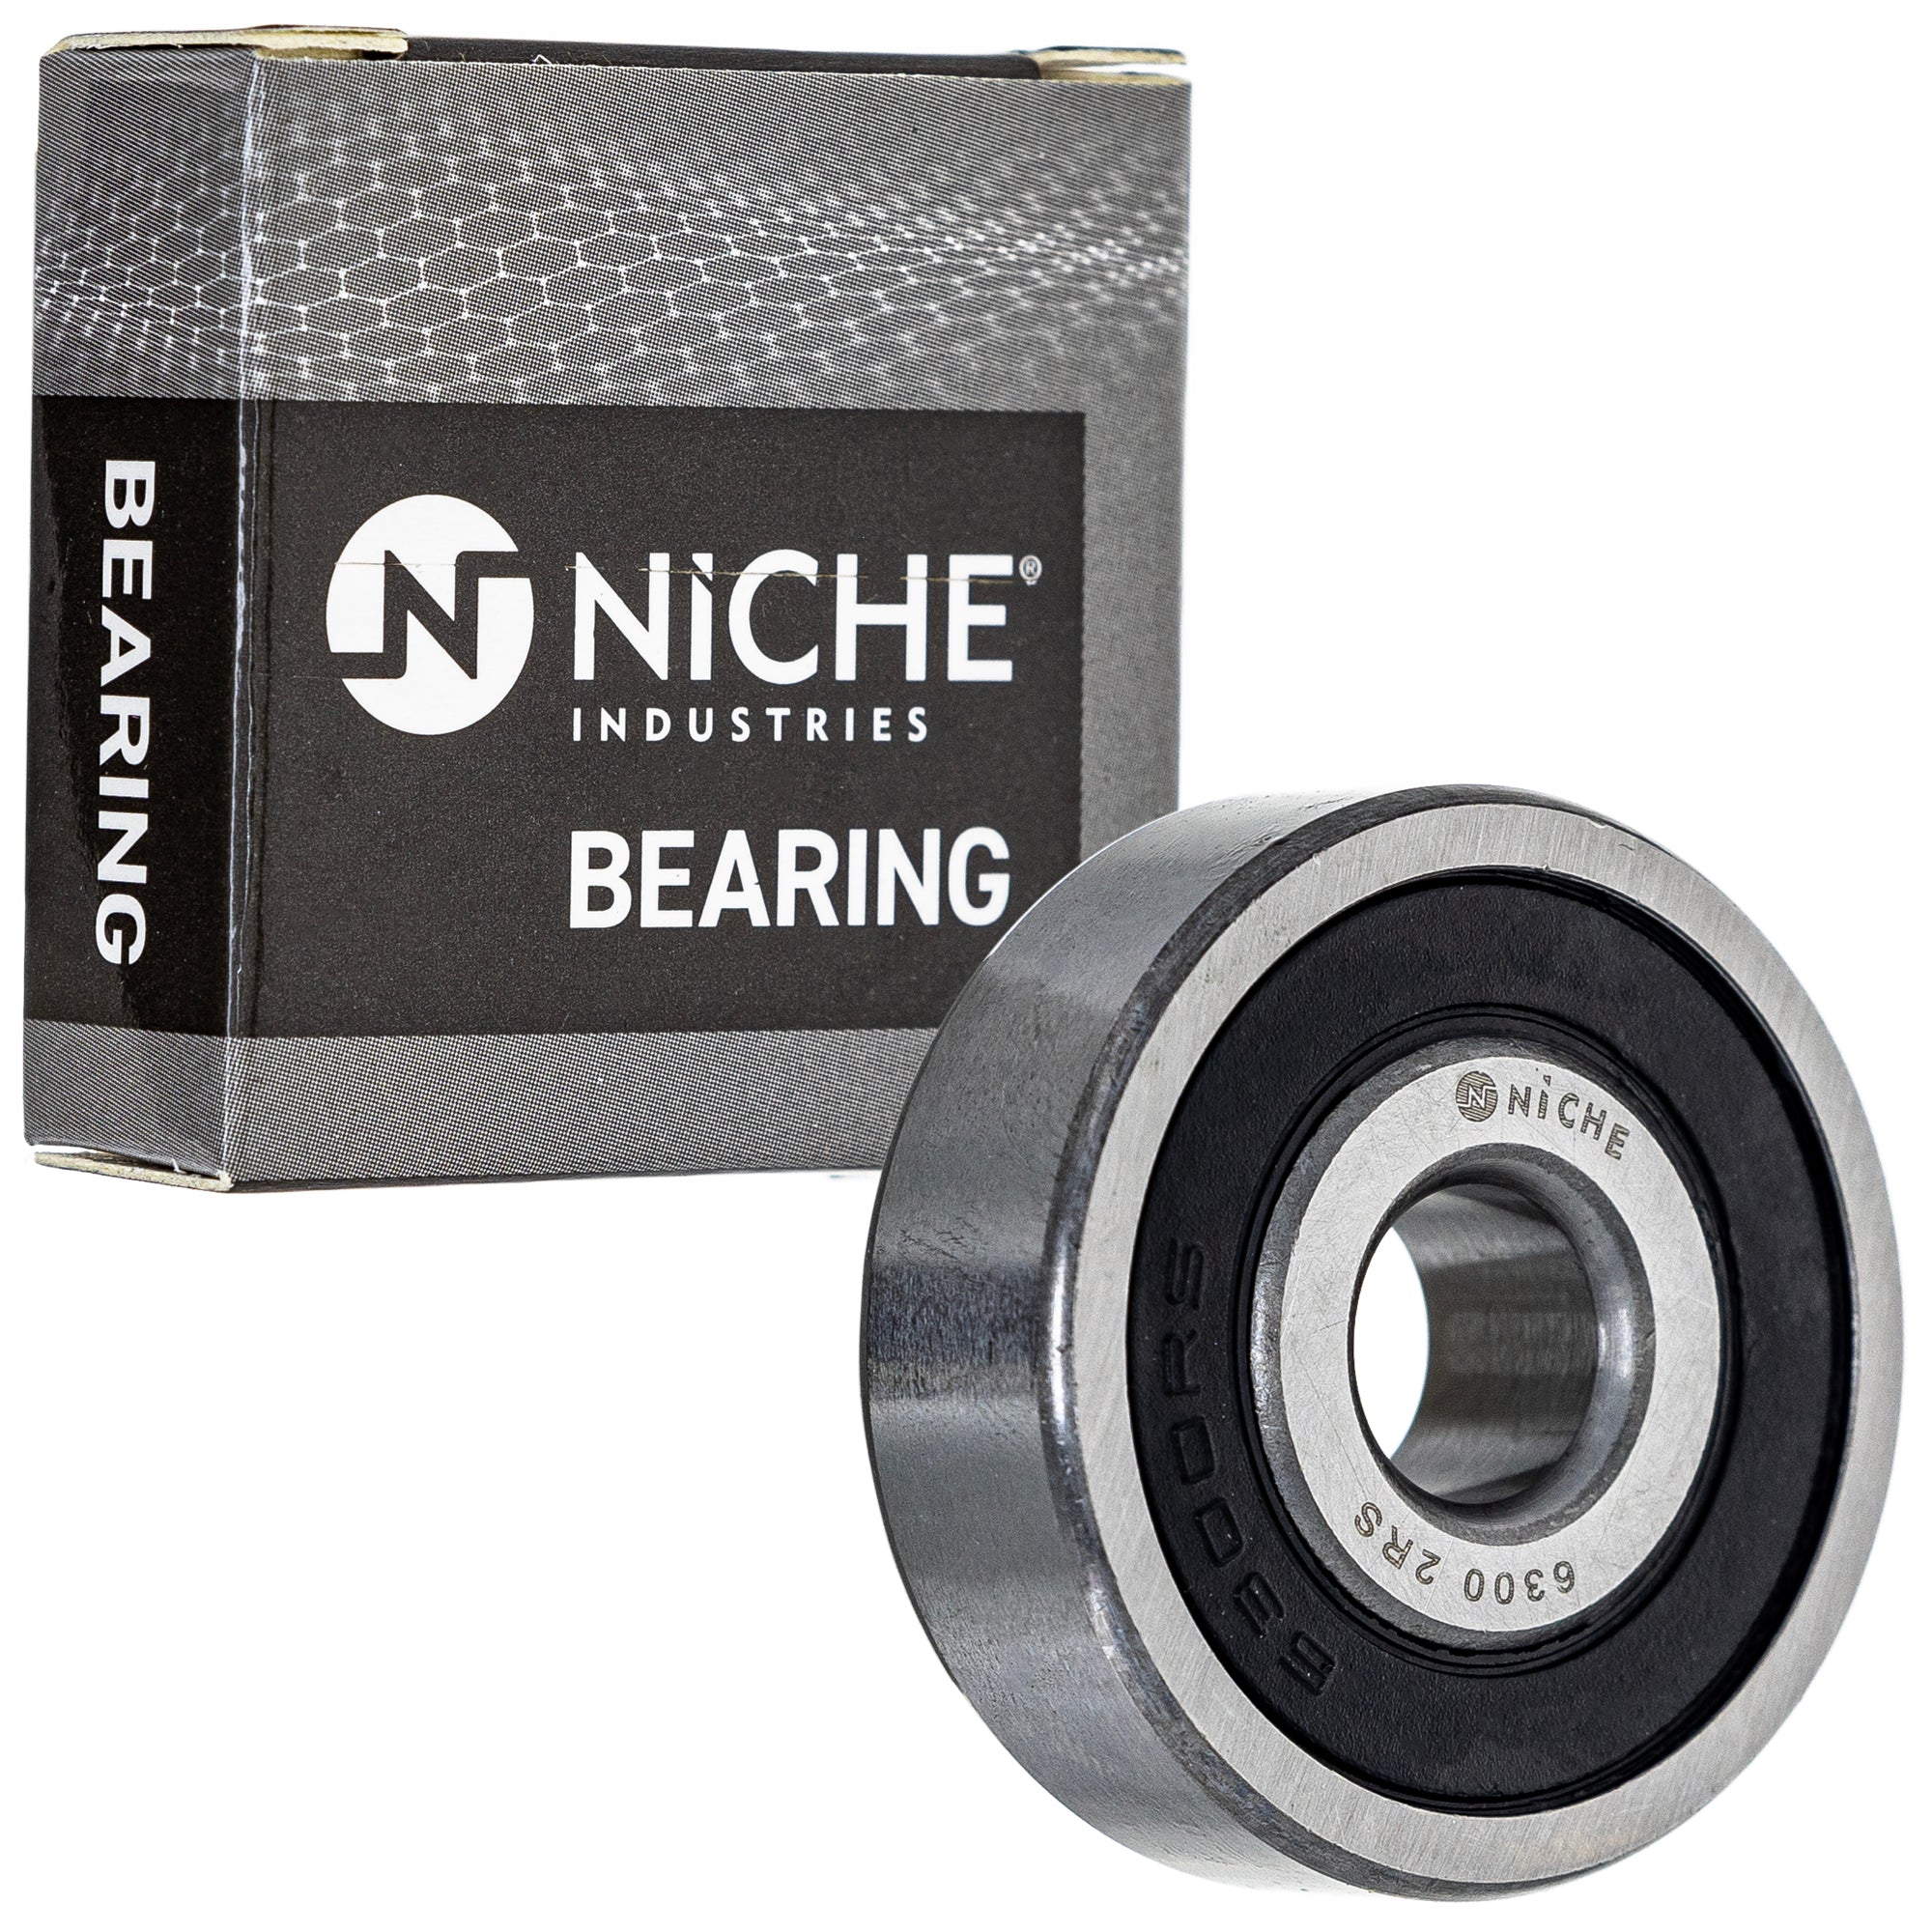 NICHE 519-CBB2265R Bearing 10-Pack for zOTHER RM60 KX80 KX60 KM100